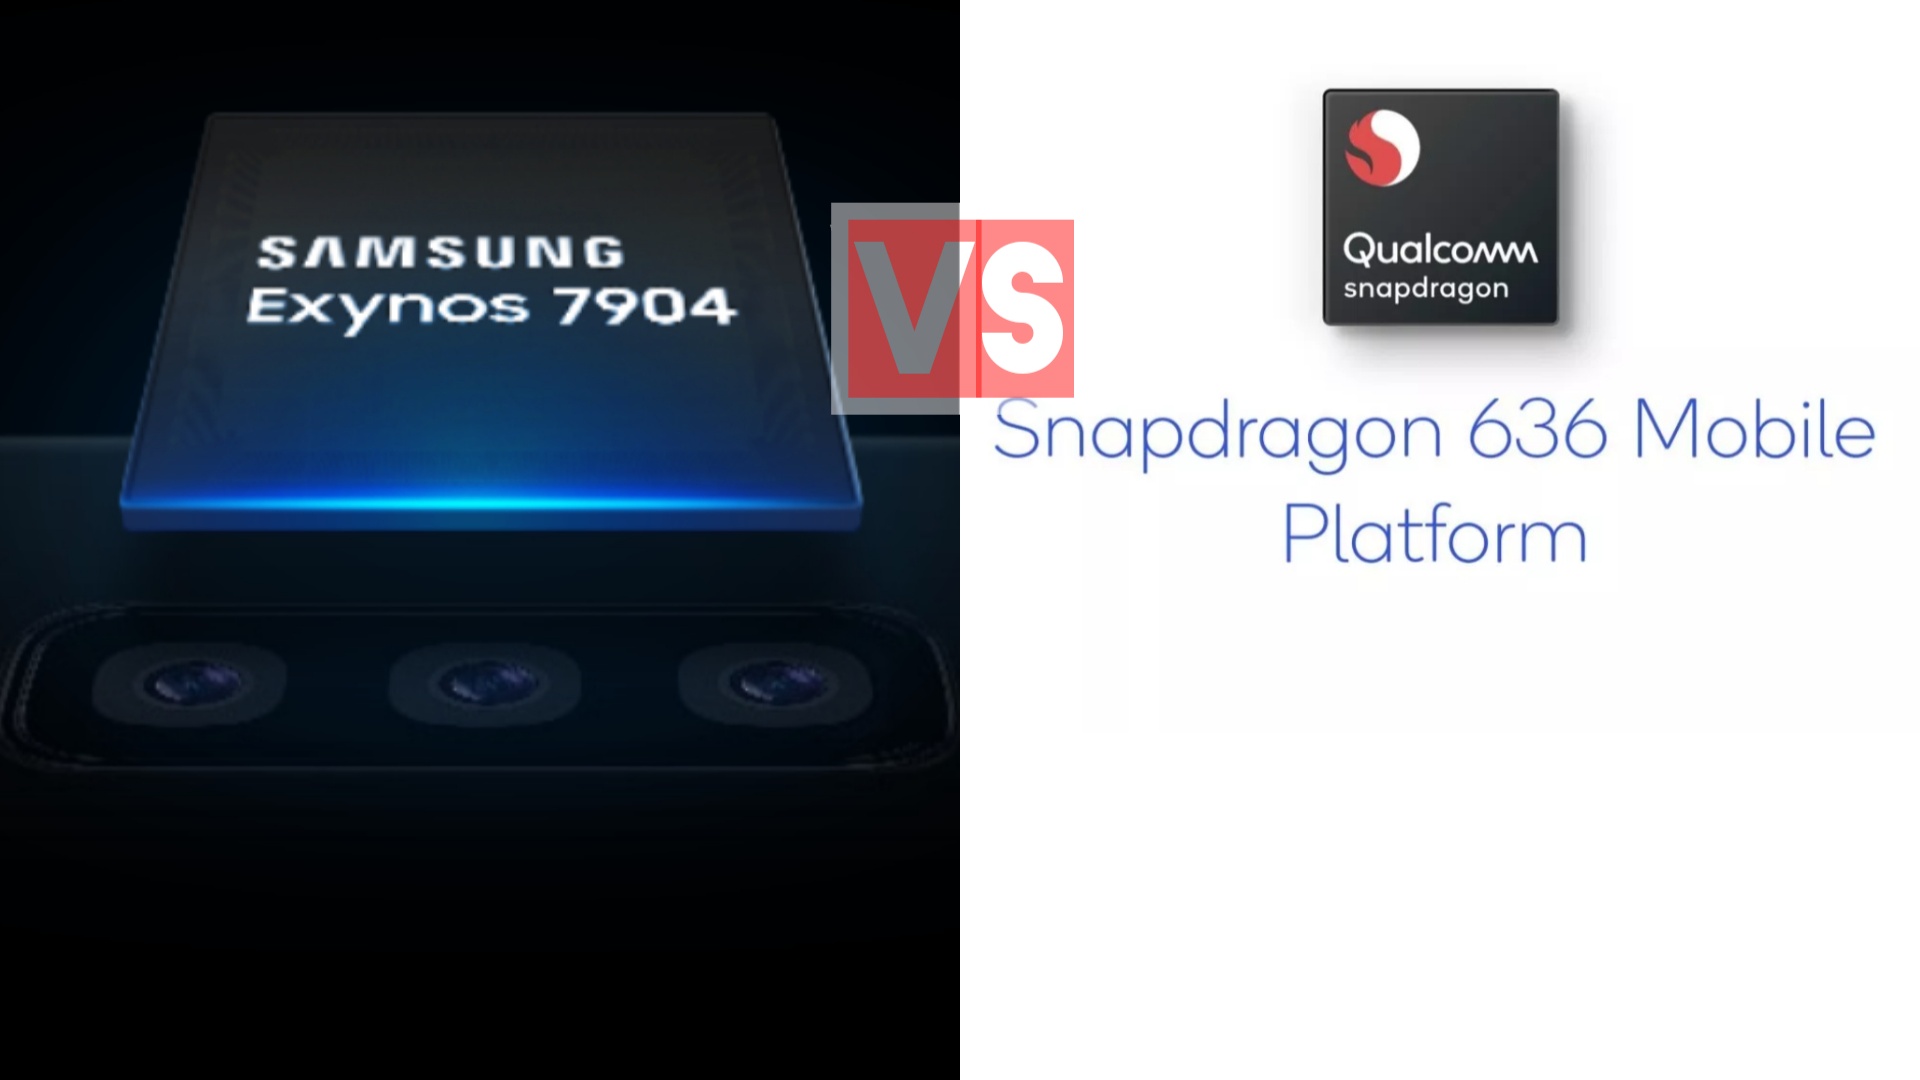 Samsung Exynos 7904 Vs Qualcomm Snapdragon 636